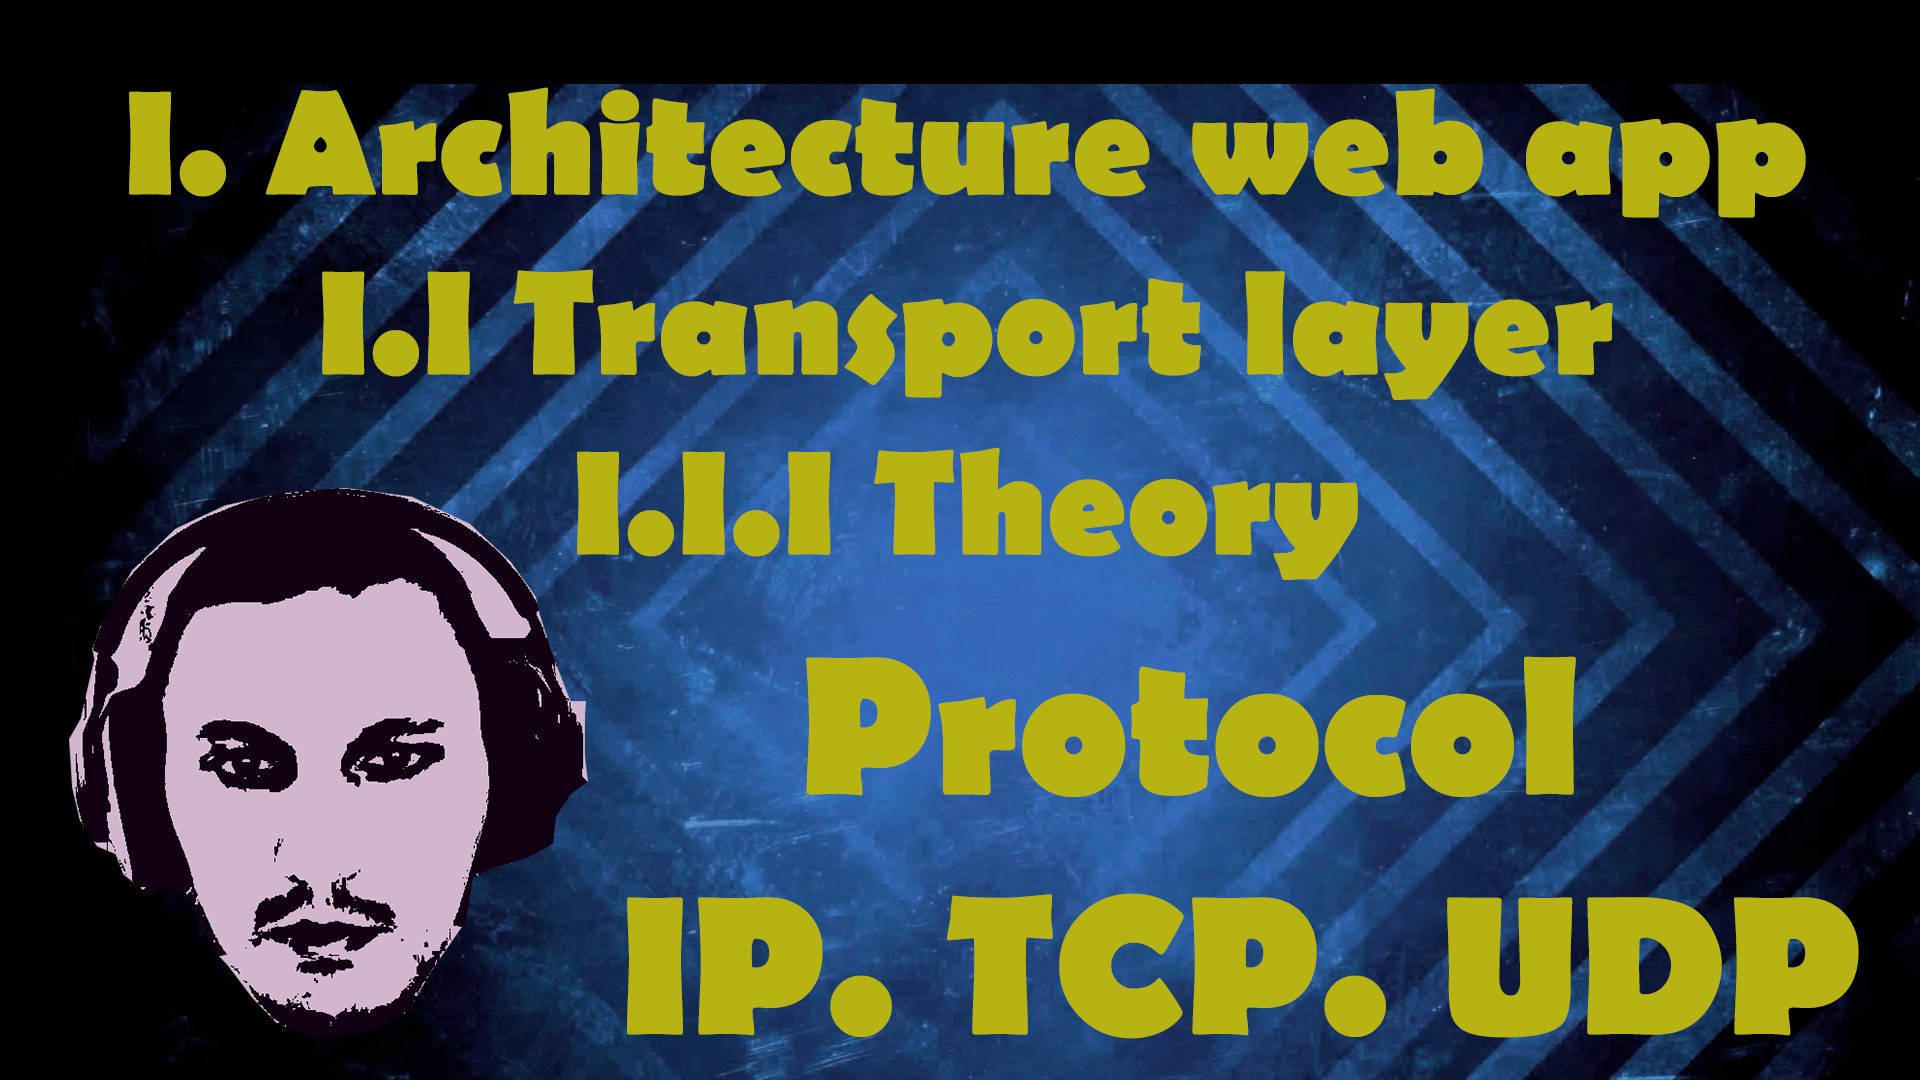 I. Architecture web app I.I Transport layer I.I.I Theory - Protocol. IP. TCP. UDP